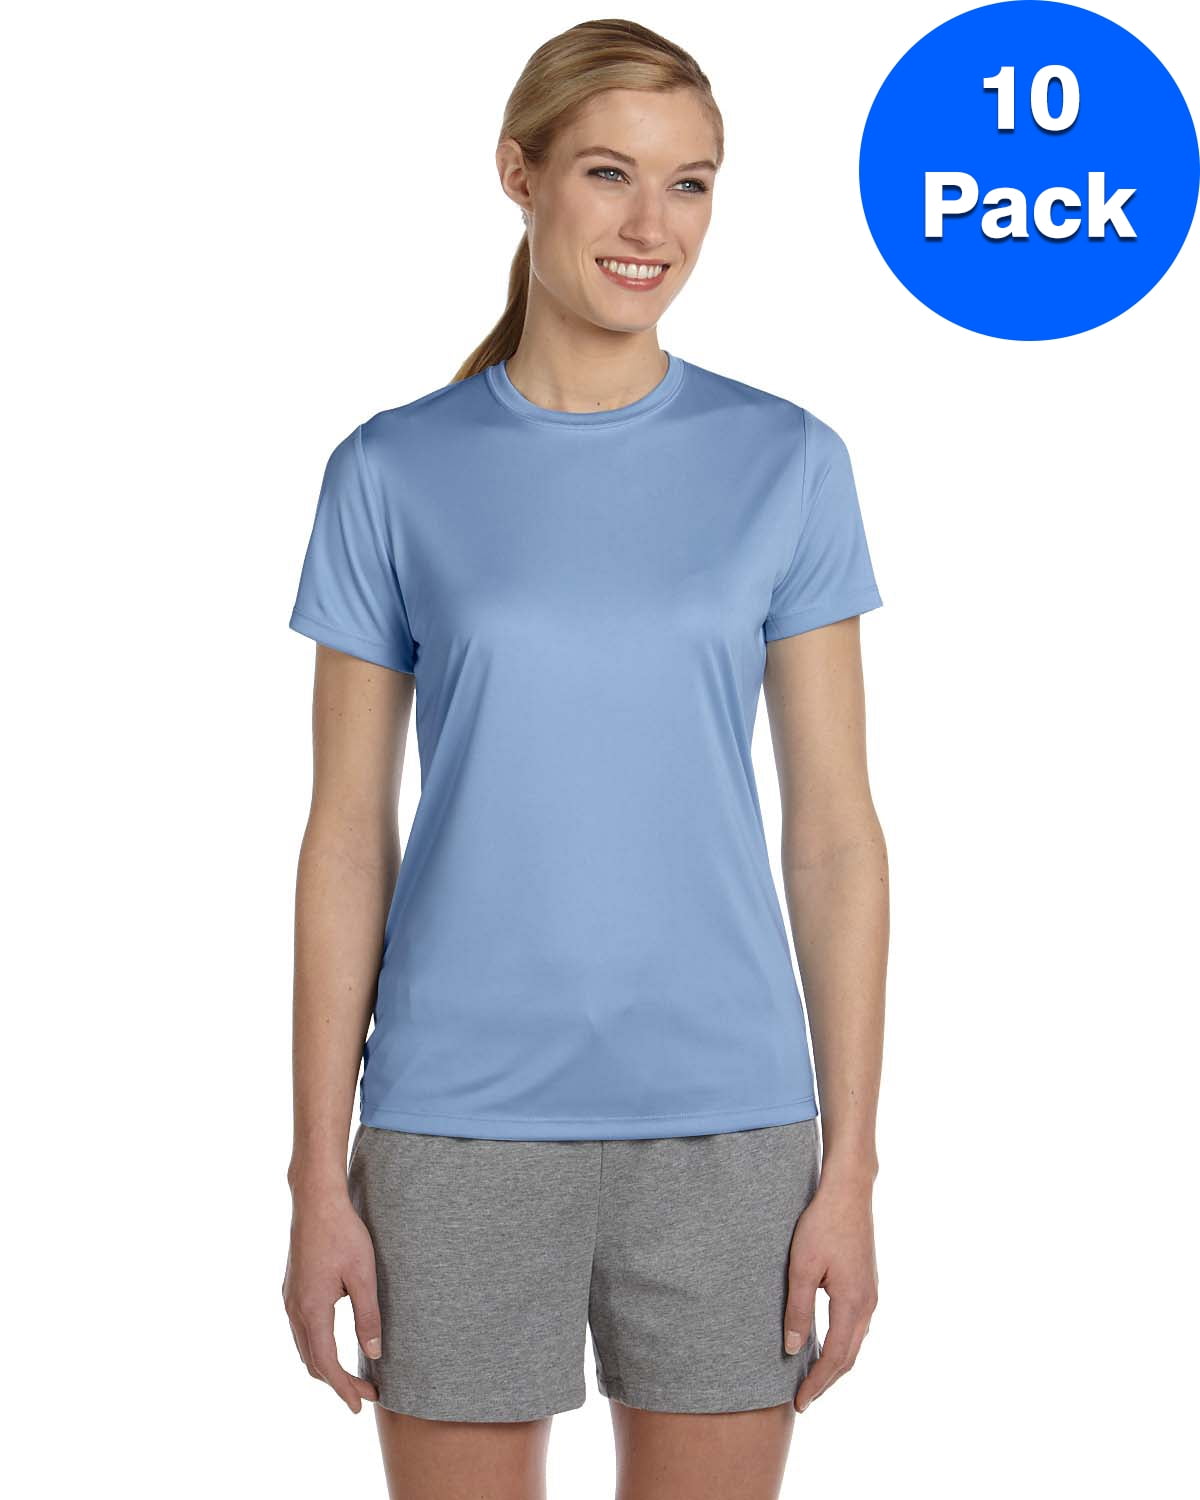 Womens 4 oz. Cool Dri T-Shirt 4830 (10 PACK)